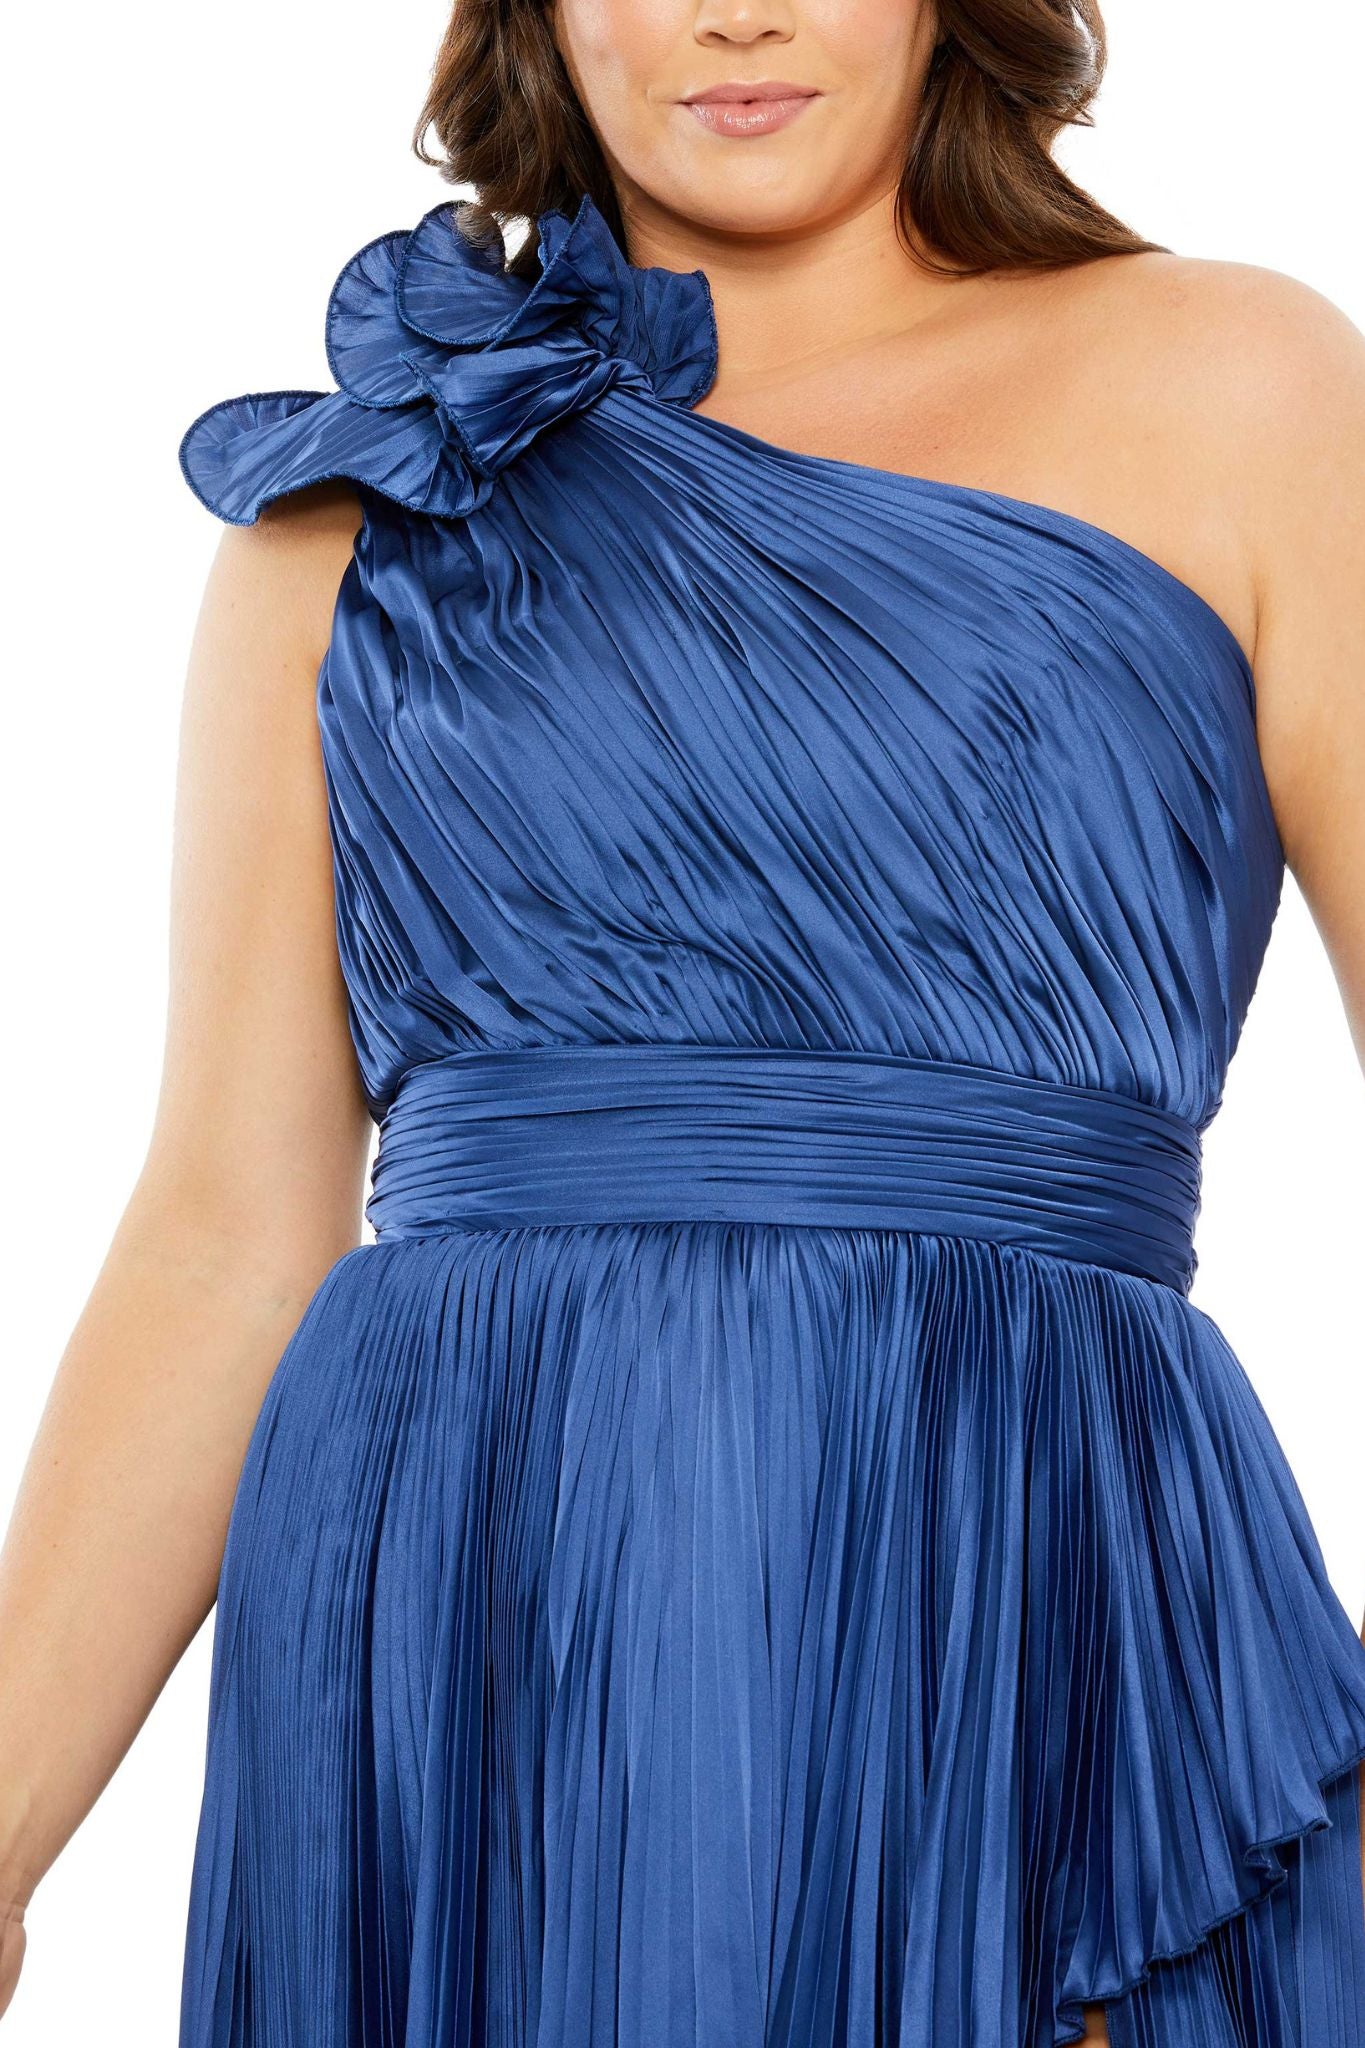 Amara One-Shoulder Gown in Sapphire Blue by Mac Duggal - RENTAL